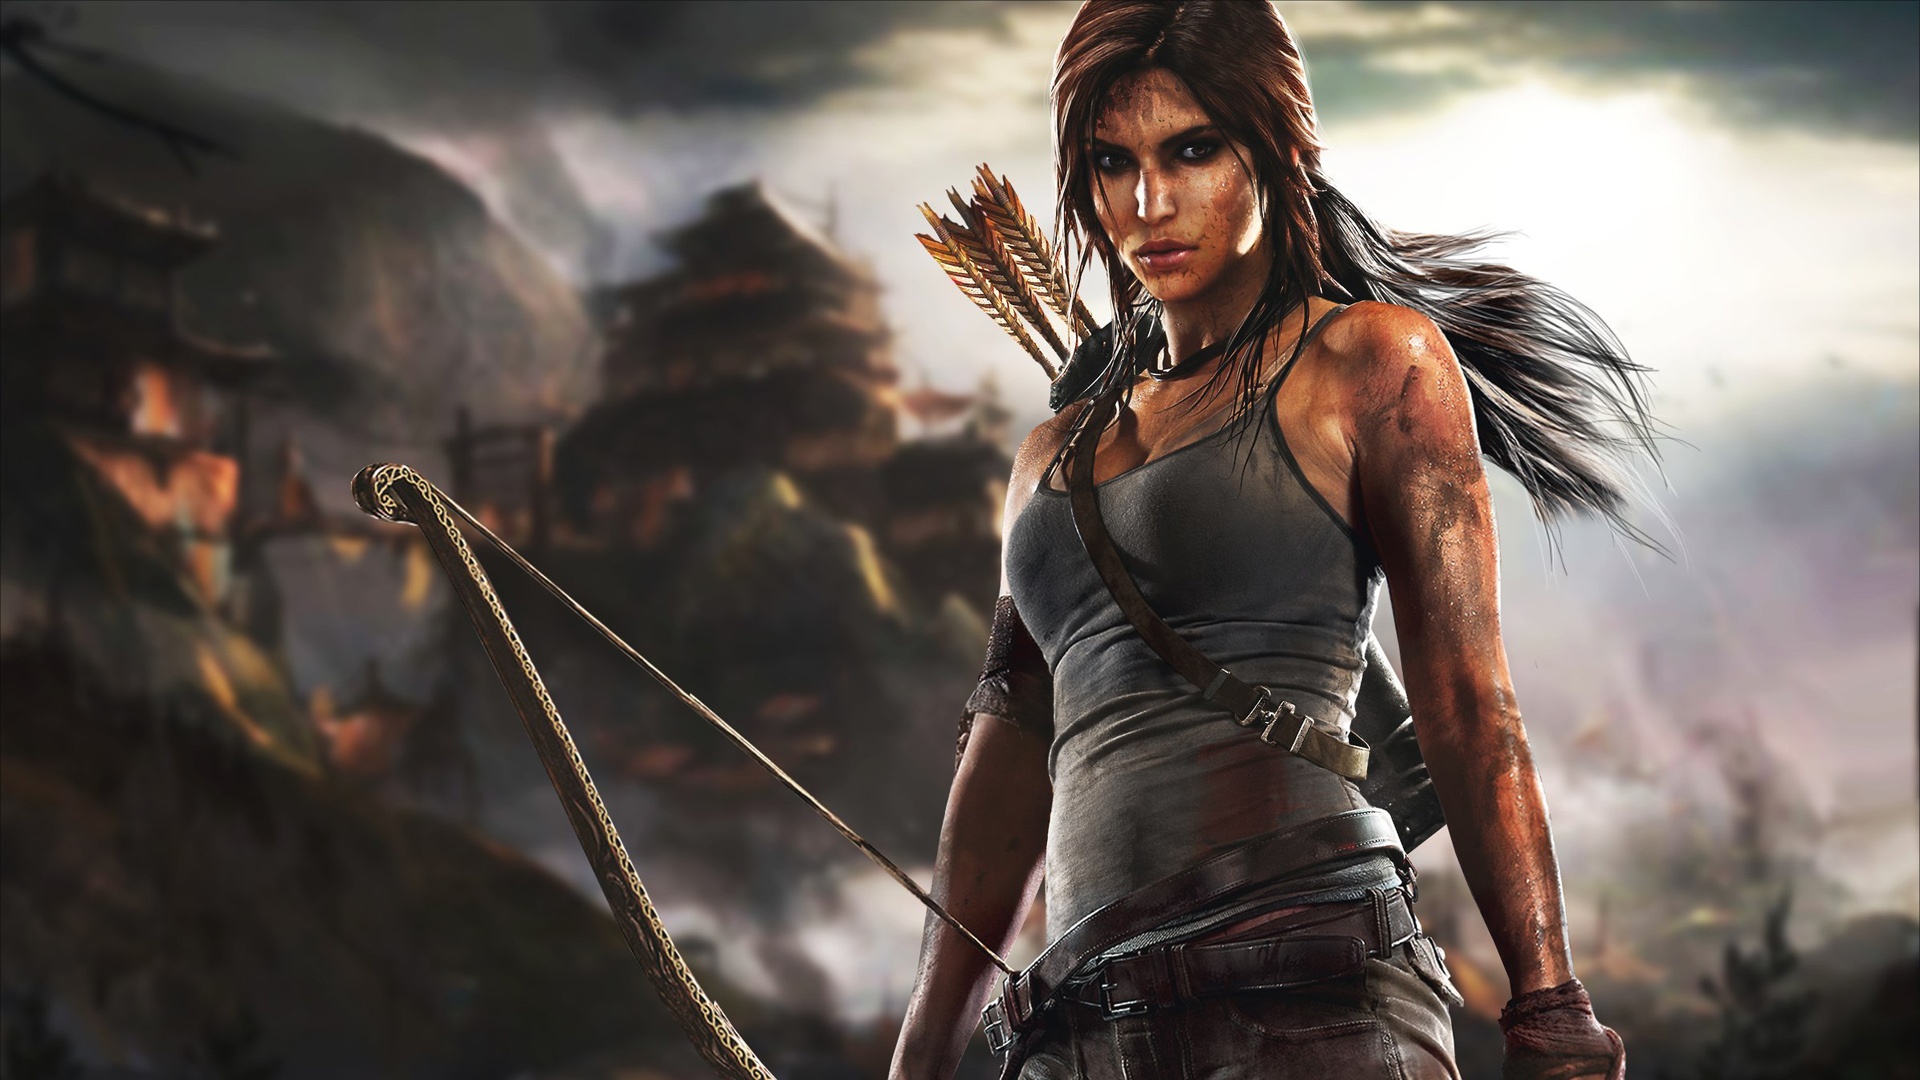 Wallpaper Lara Croft in Tomb Raider game 1920x1200 HD Picture, Image